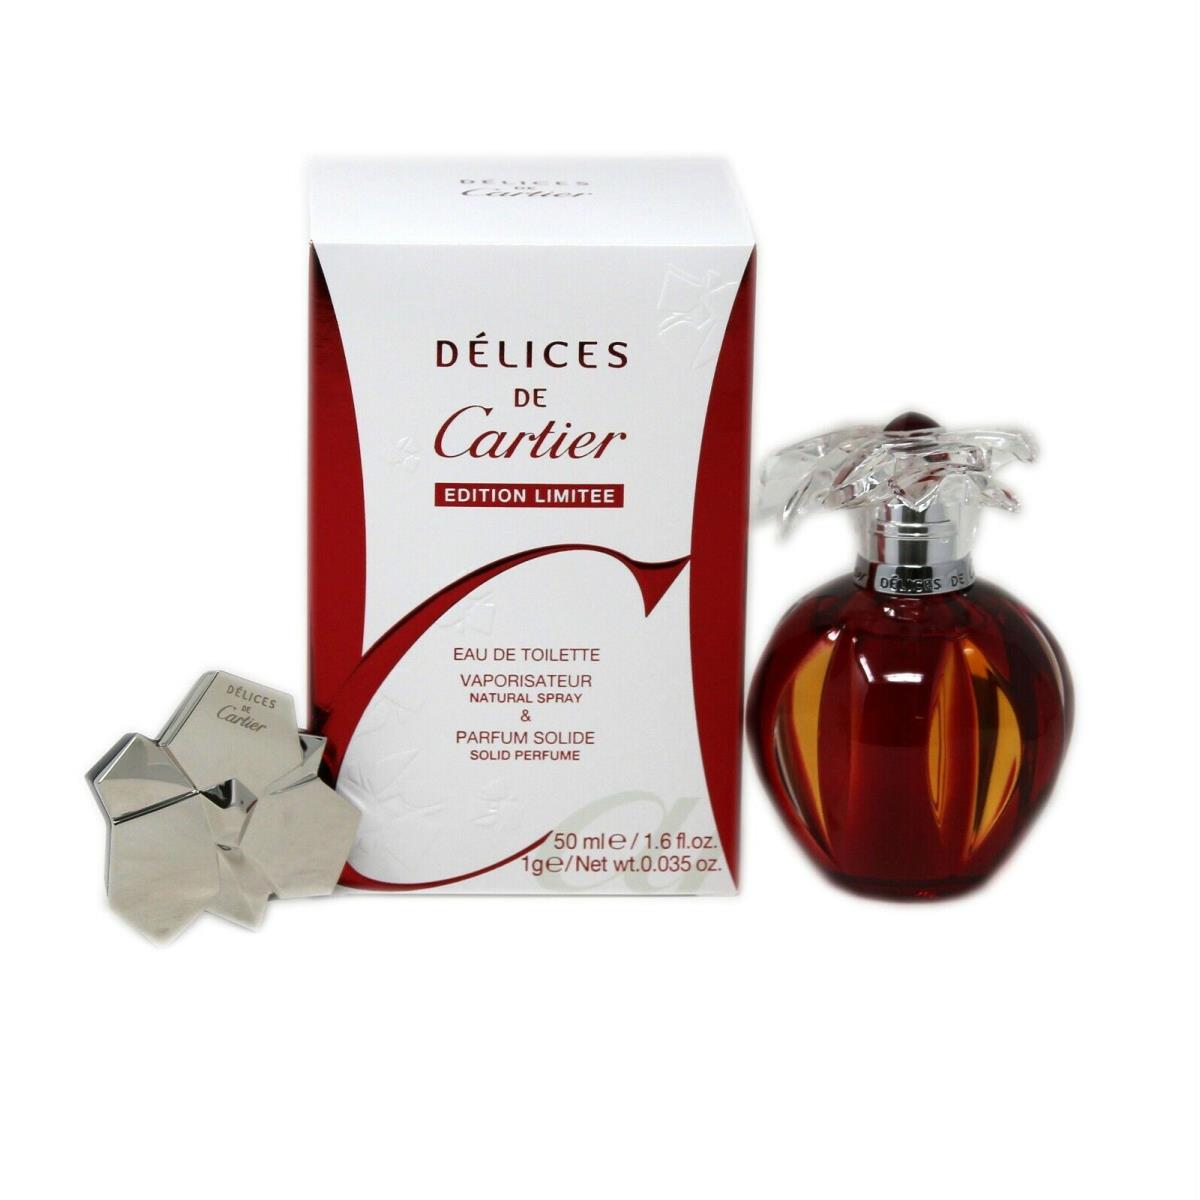 Delices DE Cartier Eau DE Toilette Spray 50ML Solid Perfume 1G Limited Edition